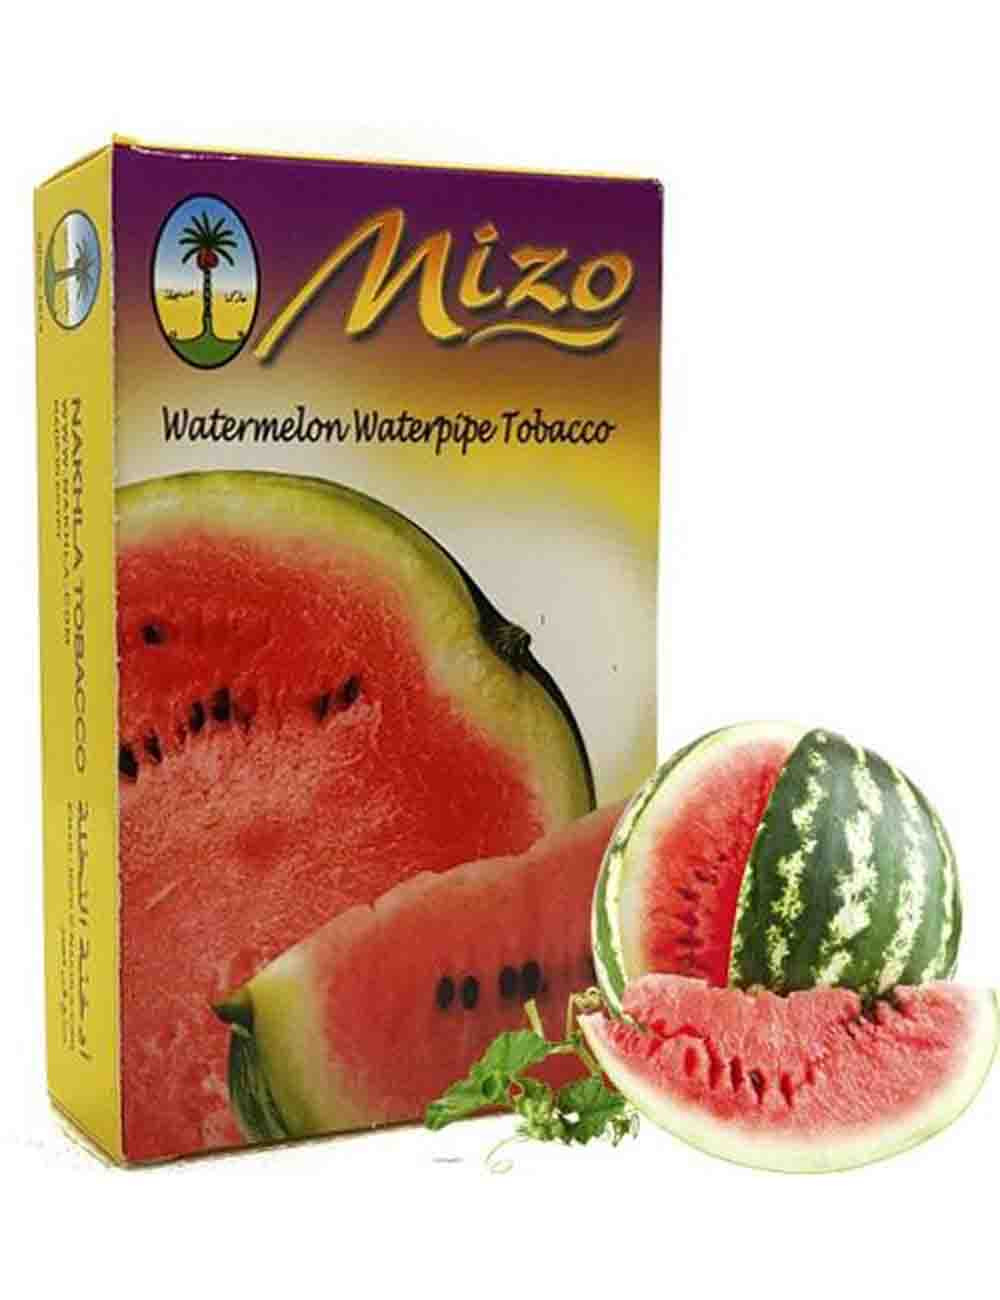 Mizo Watermelon